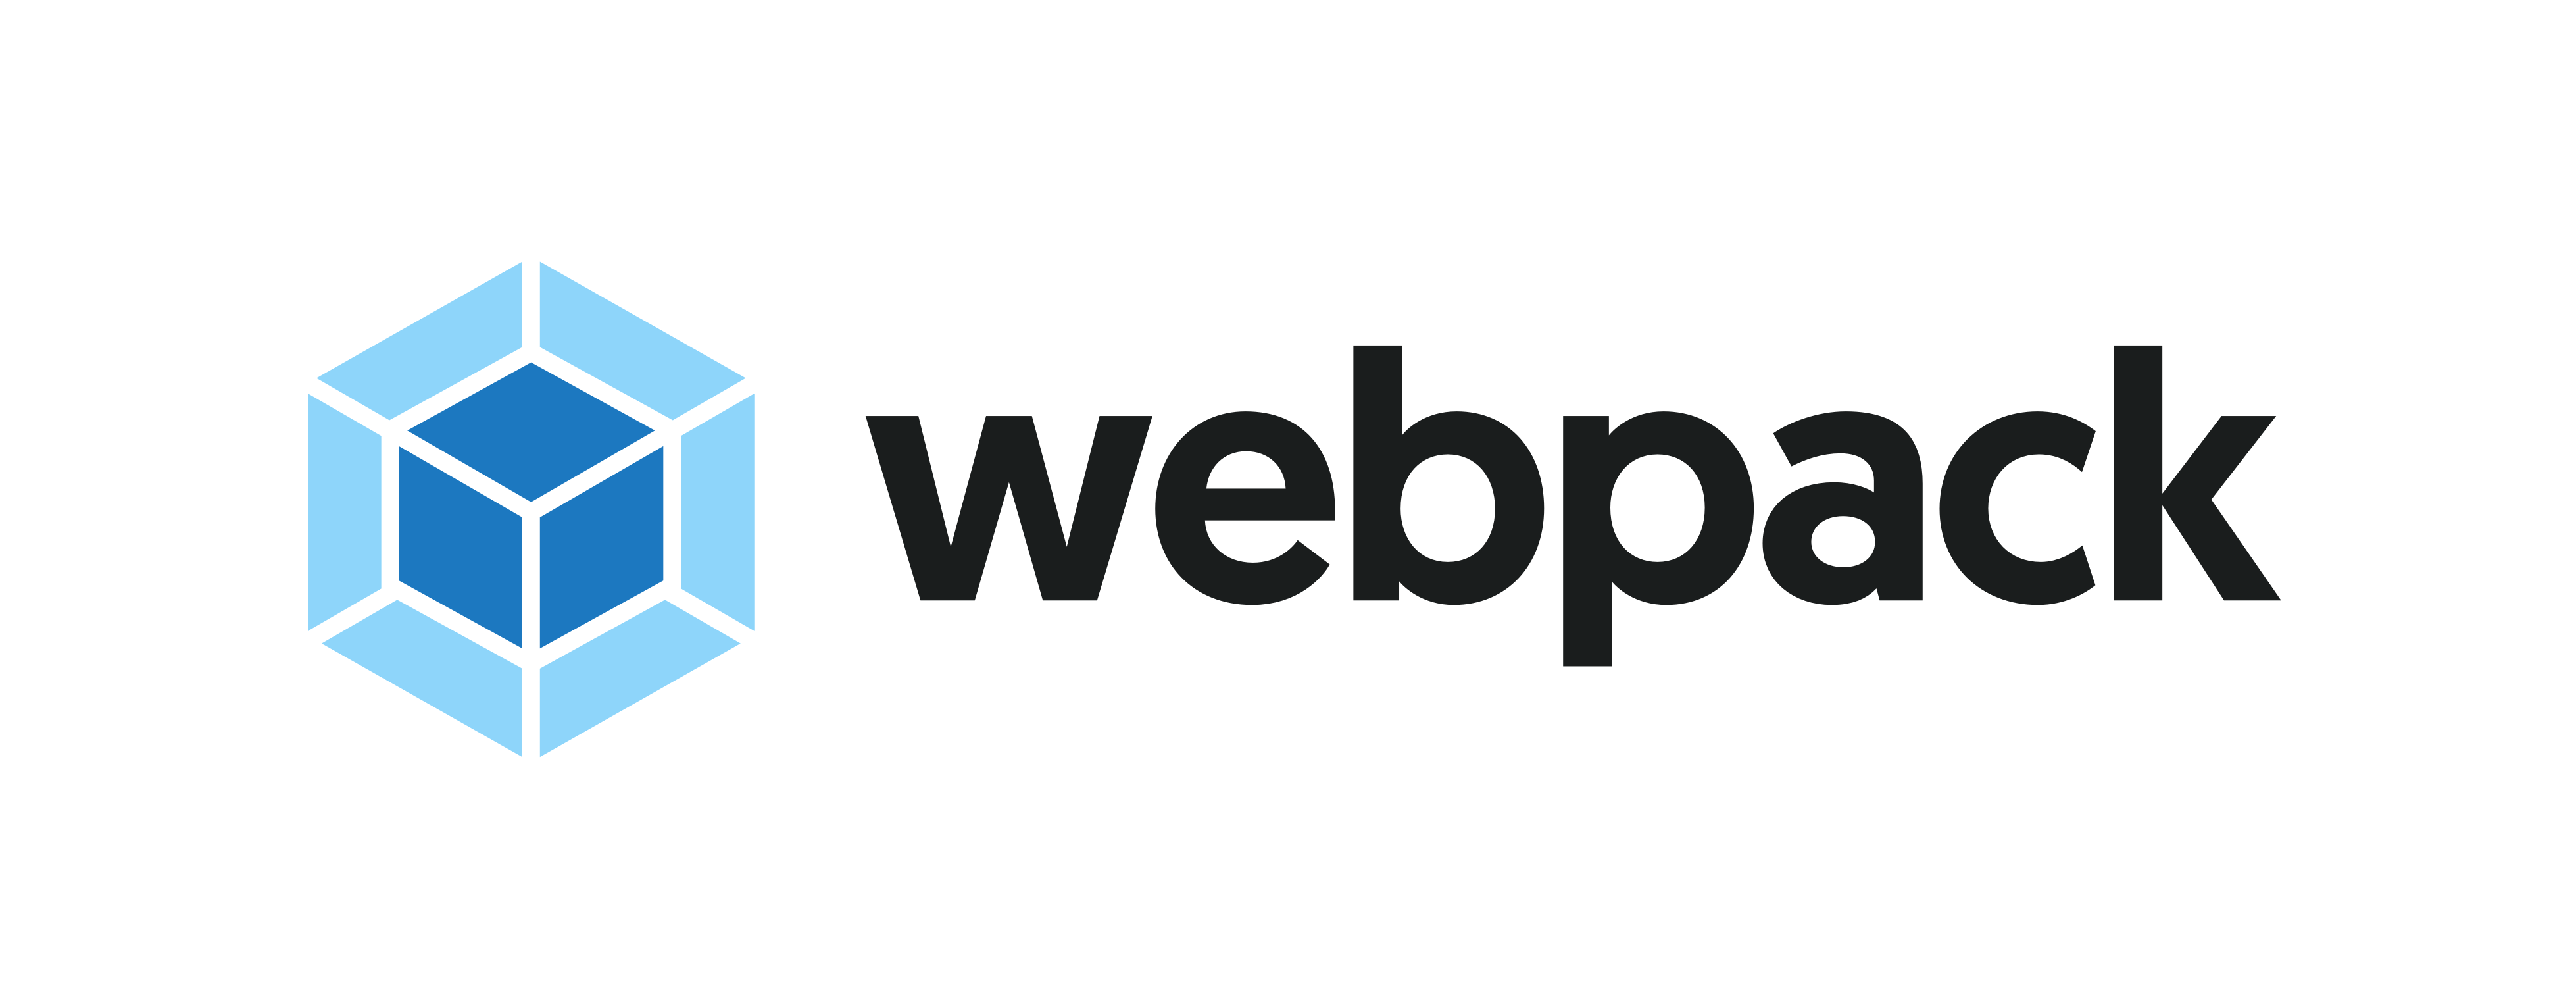 Narzędzia - webpack